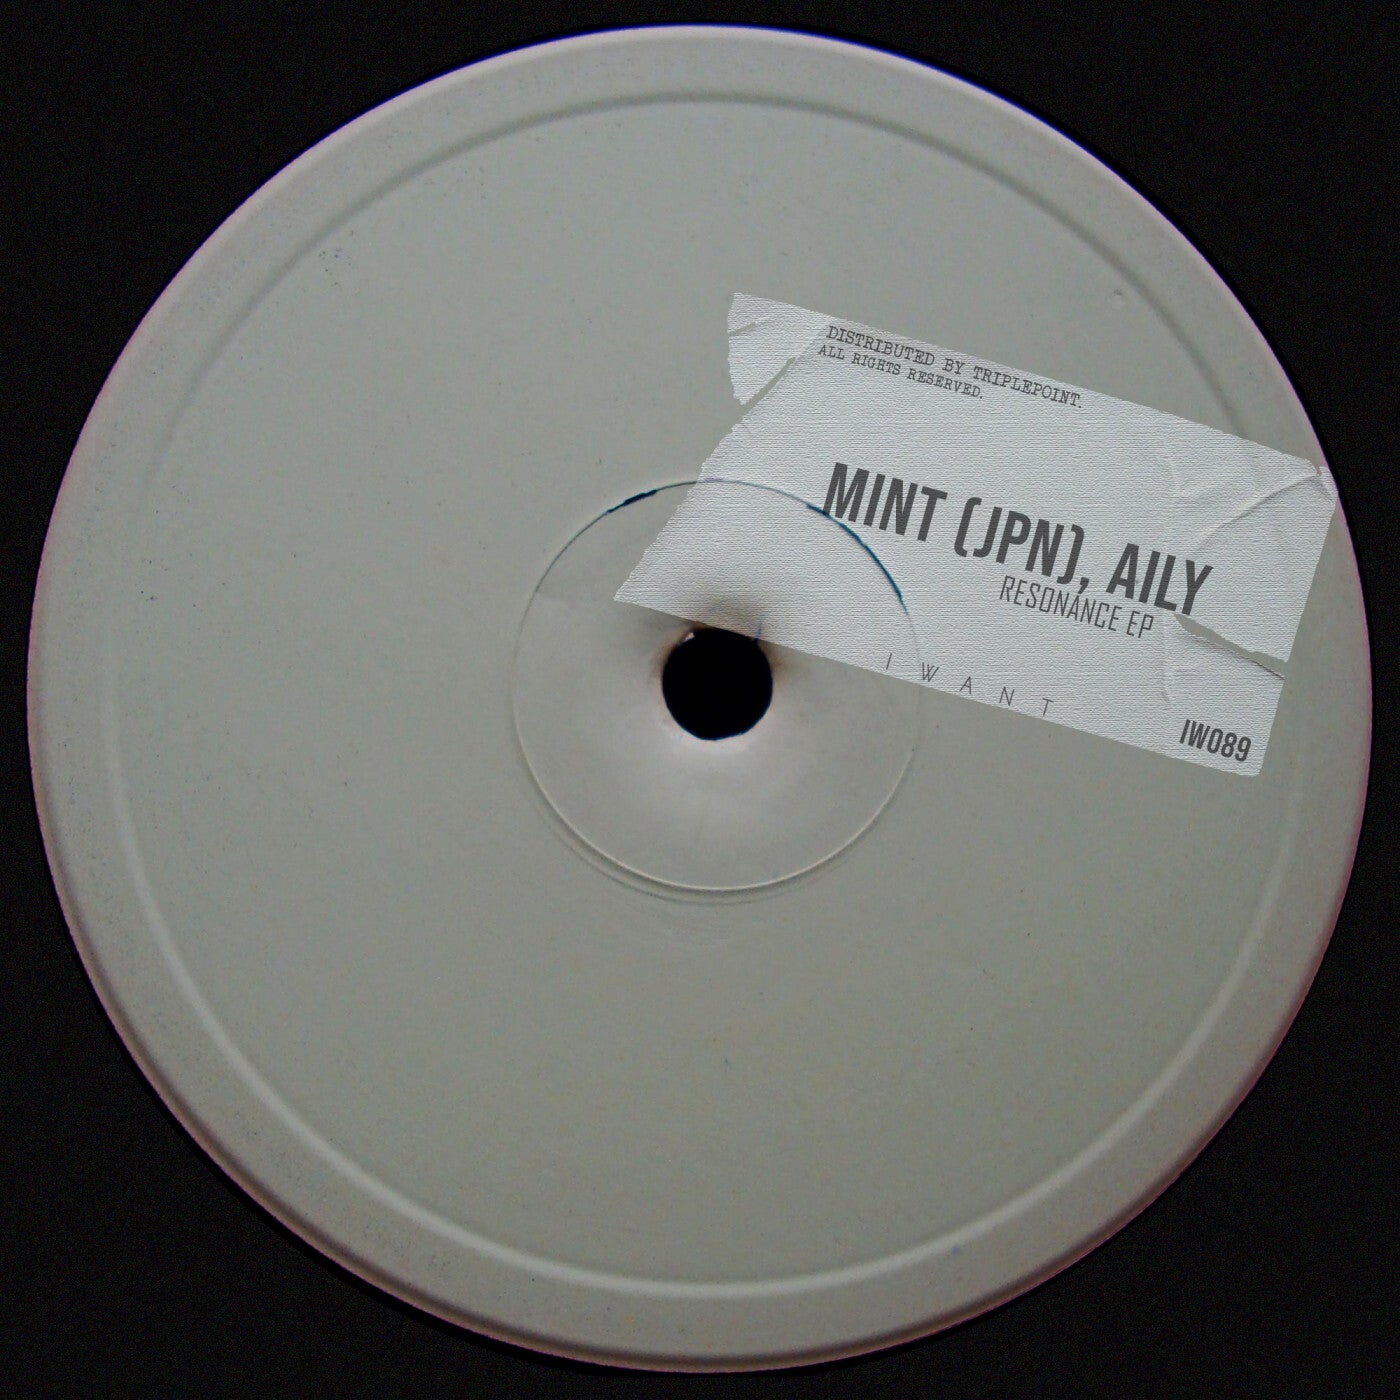 AILY, MINT (JPN) – Resonance EP [IW089]